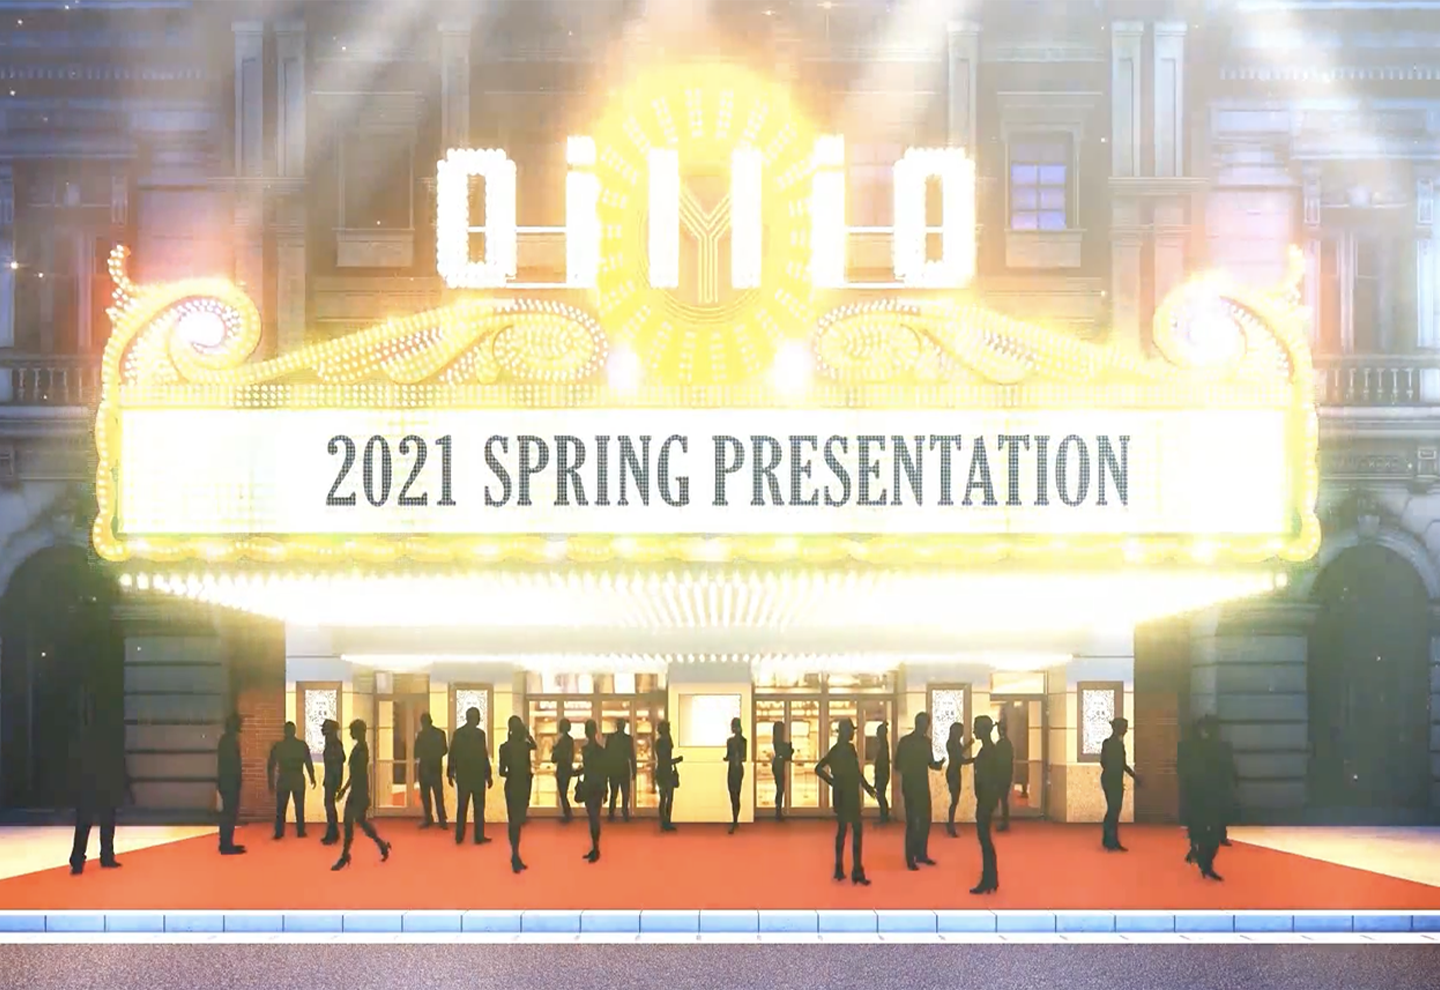 oillio Presentation Spring 2021